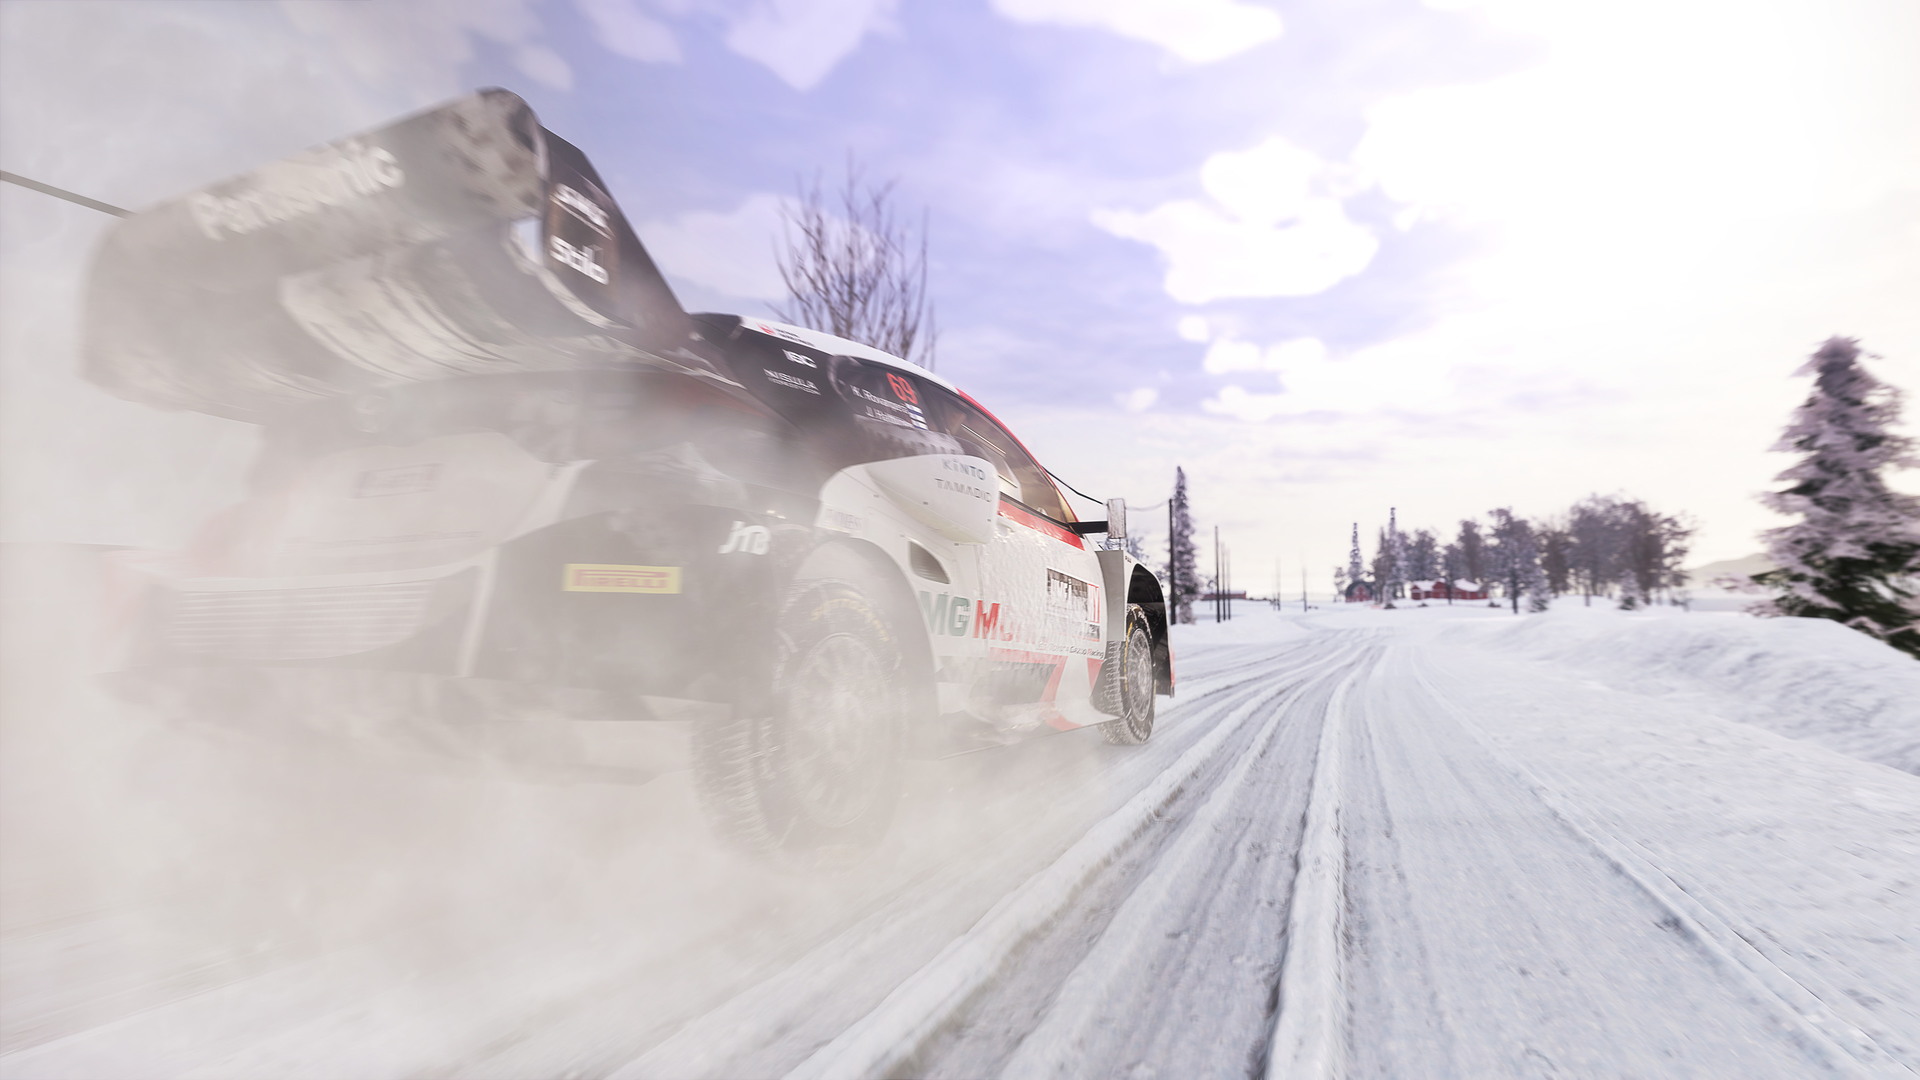 WRC Generations - screenshot 6